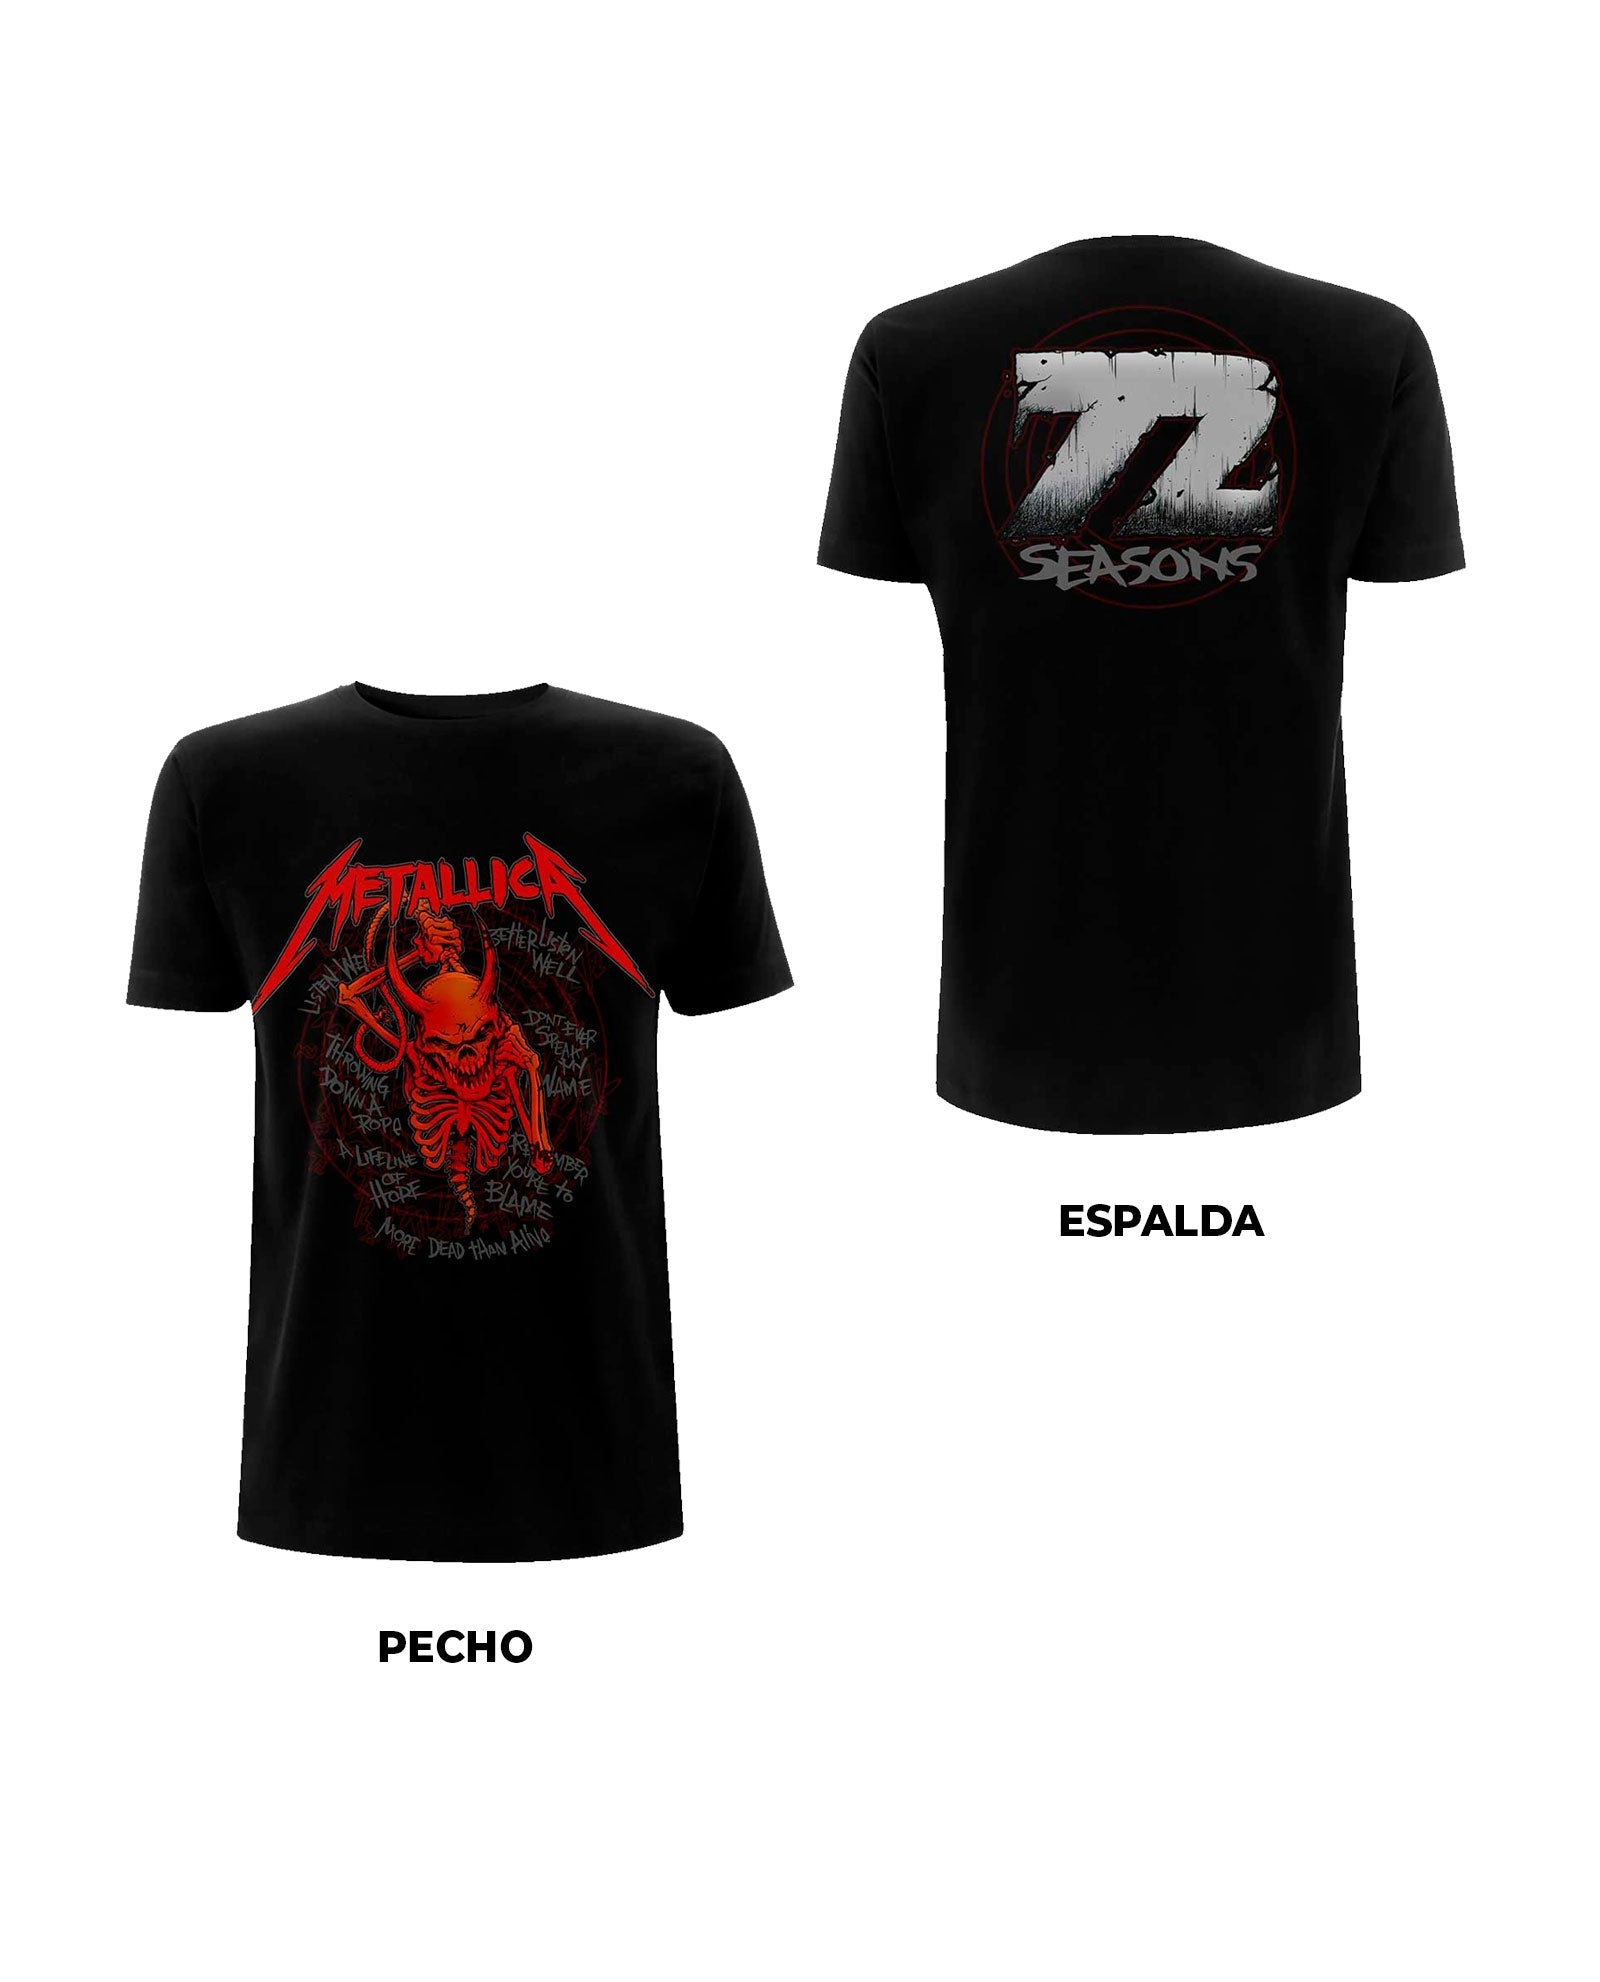 Metallica - Camiseta "Skull Screaming Red 72 Seasons" Unisex - D2fy · Rocktud - Rocktud